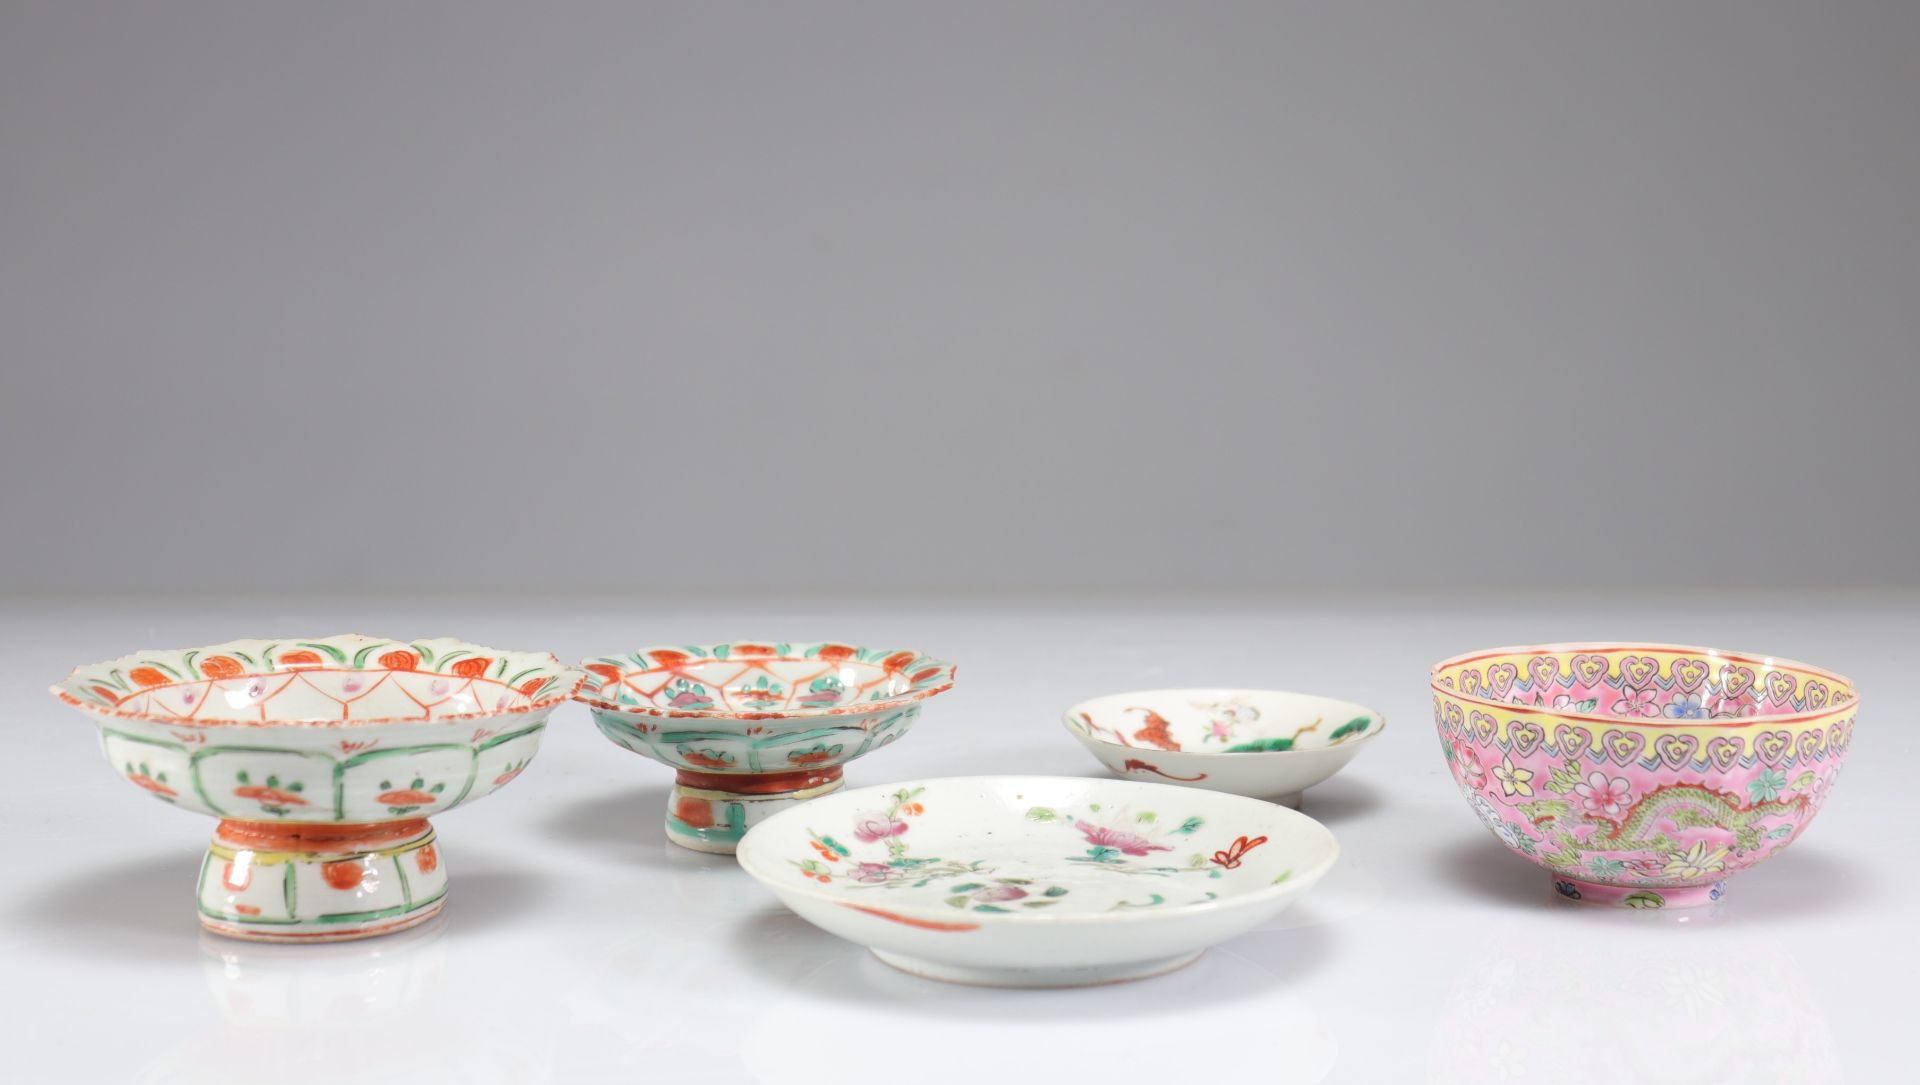 Lot (5) 19th century famille rose porcelains - Image 2 of 3